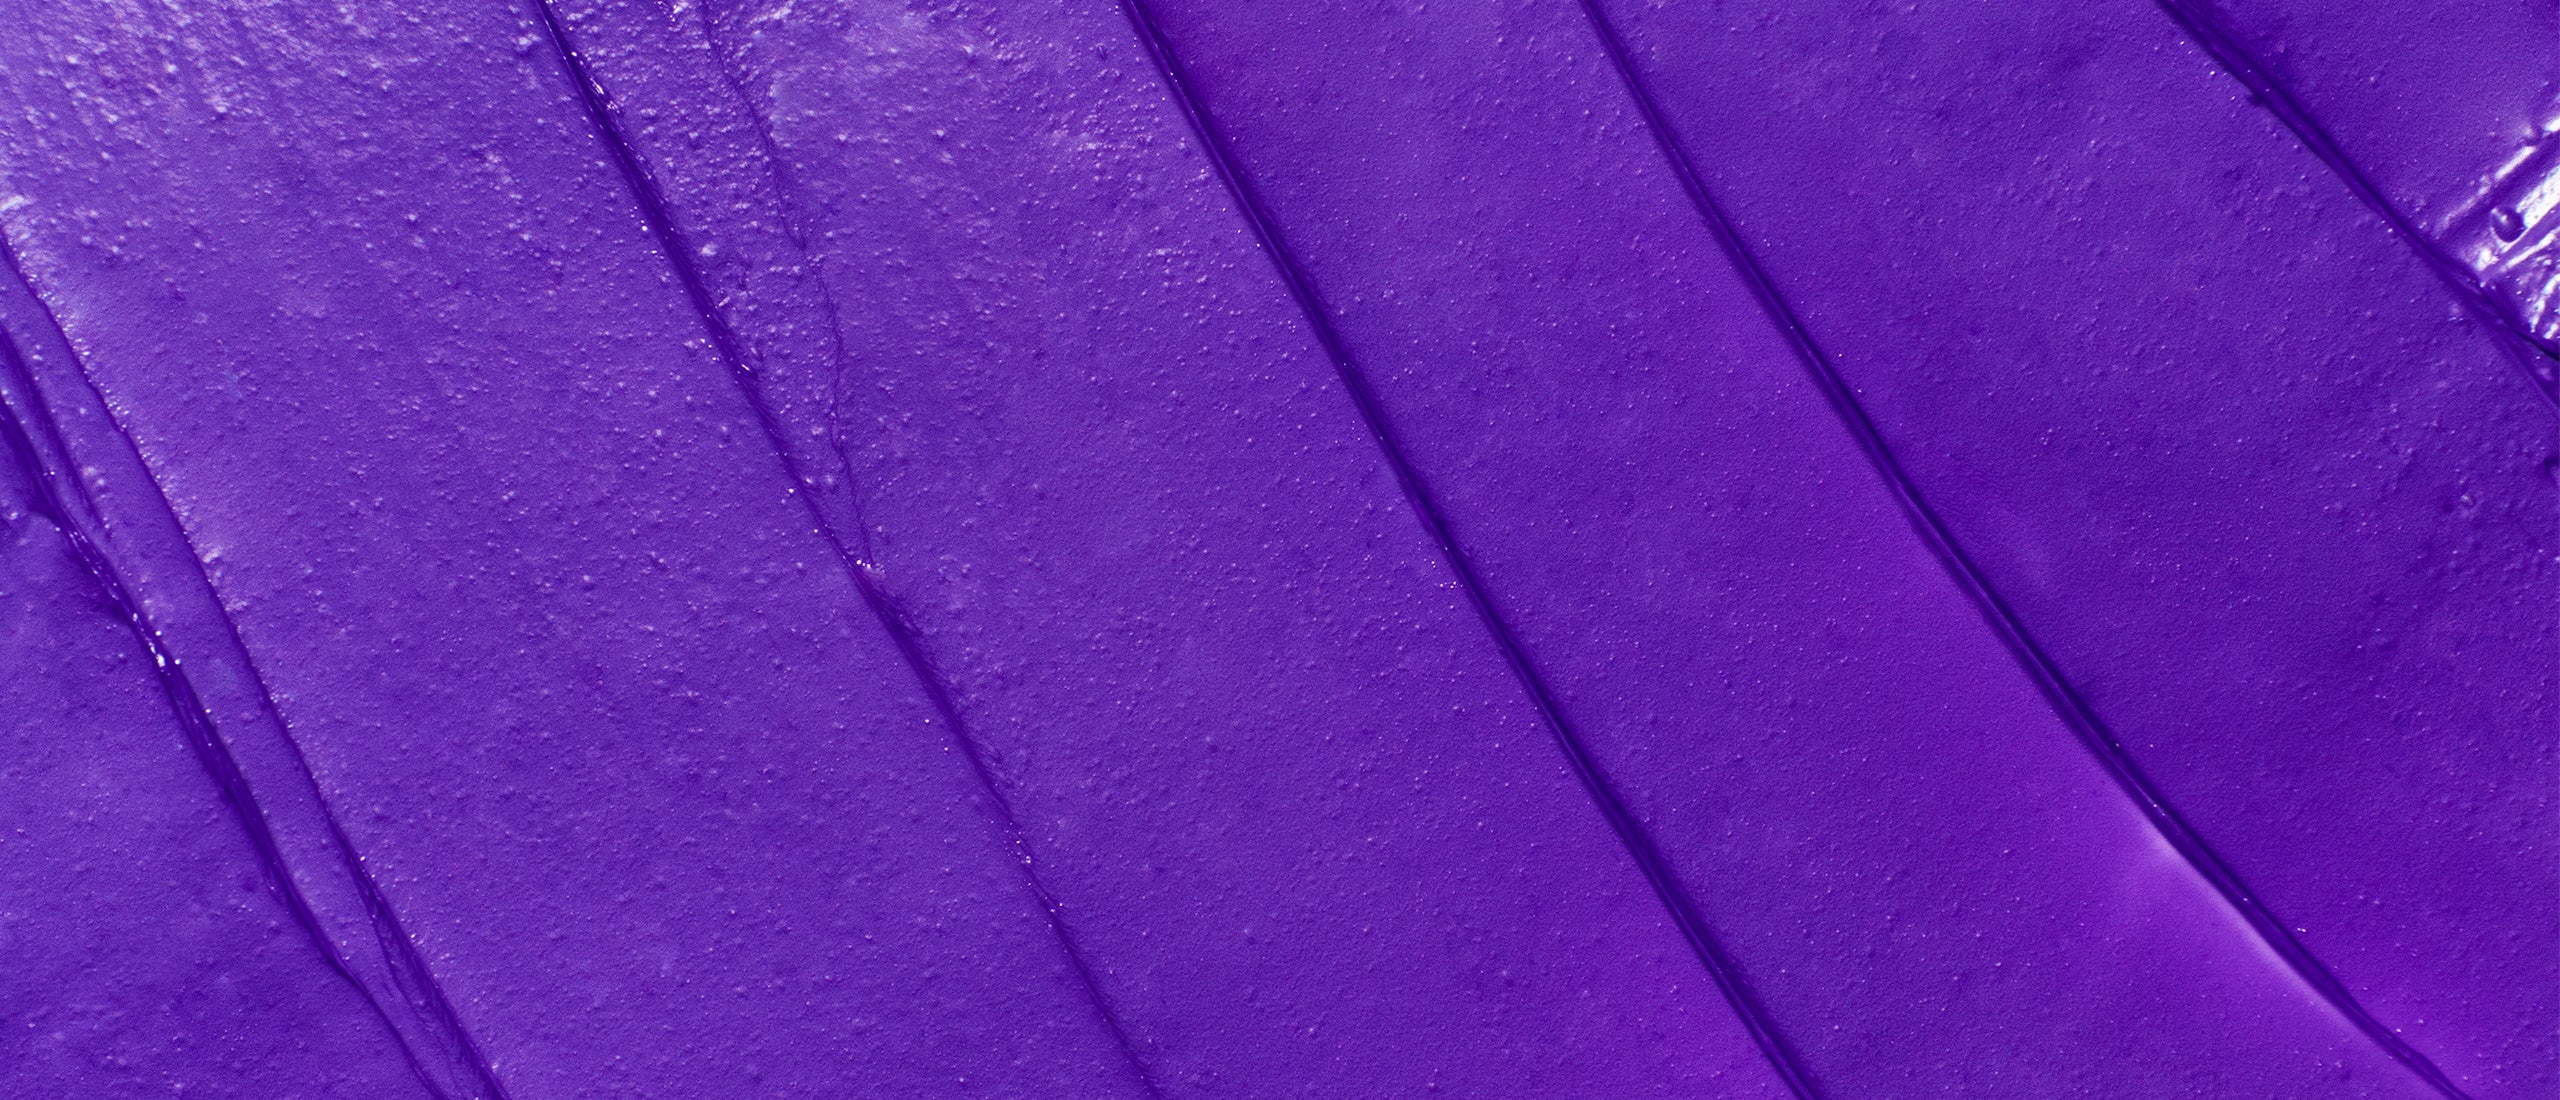 Introducing Purple Mask